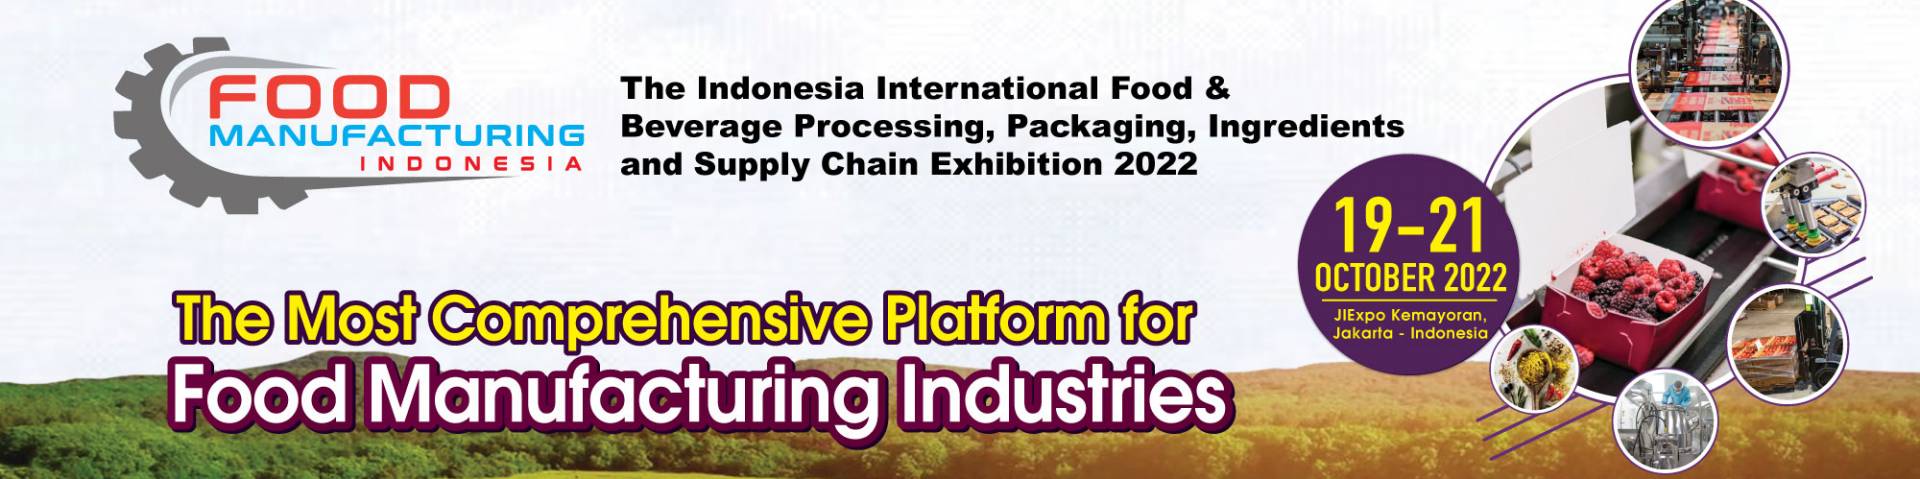 Foodmanufacturing Indonesia